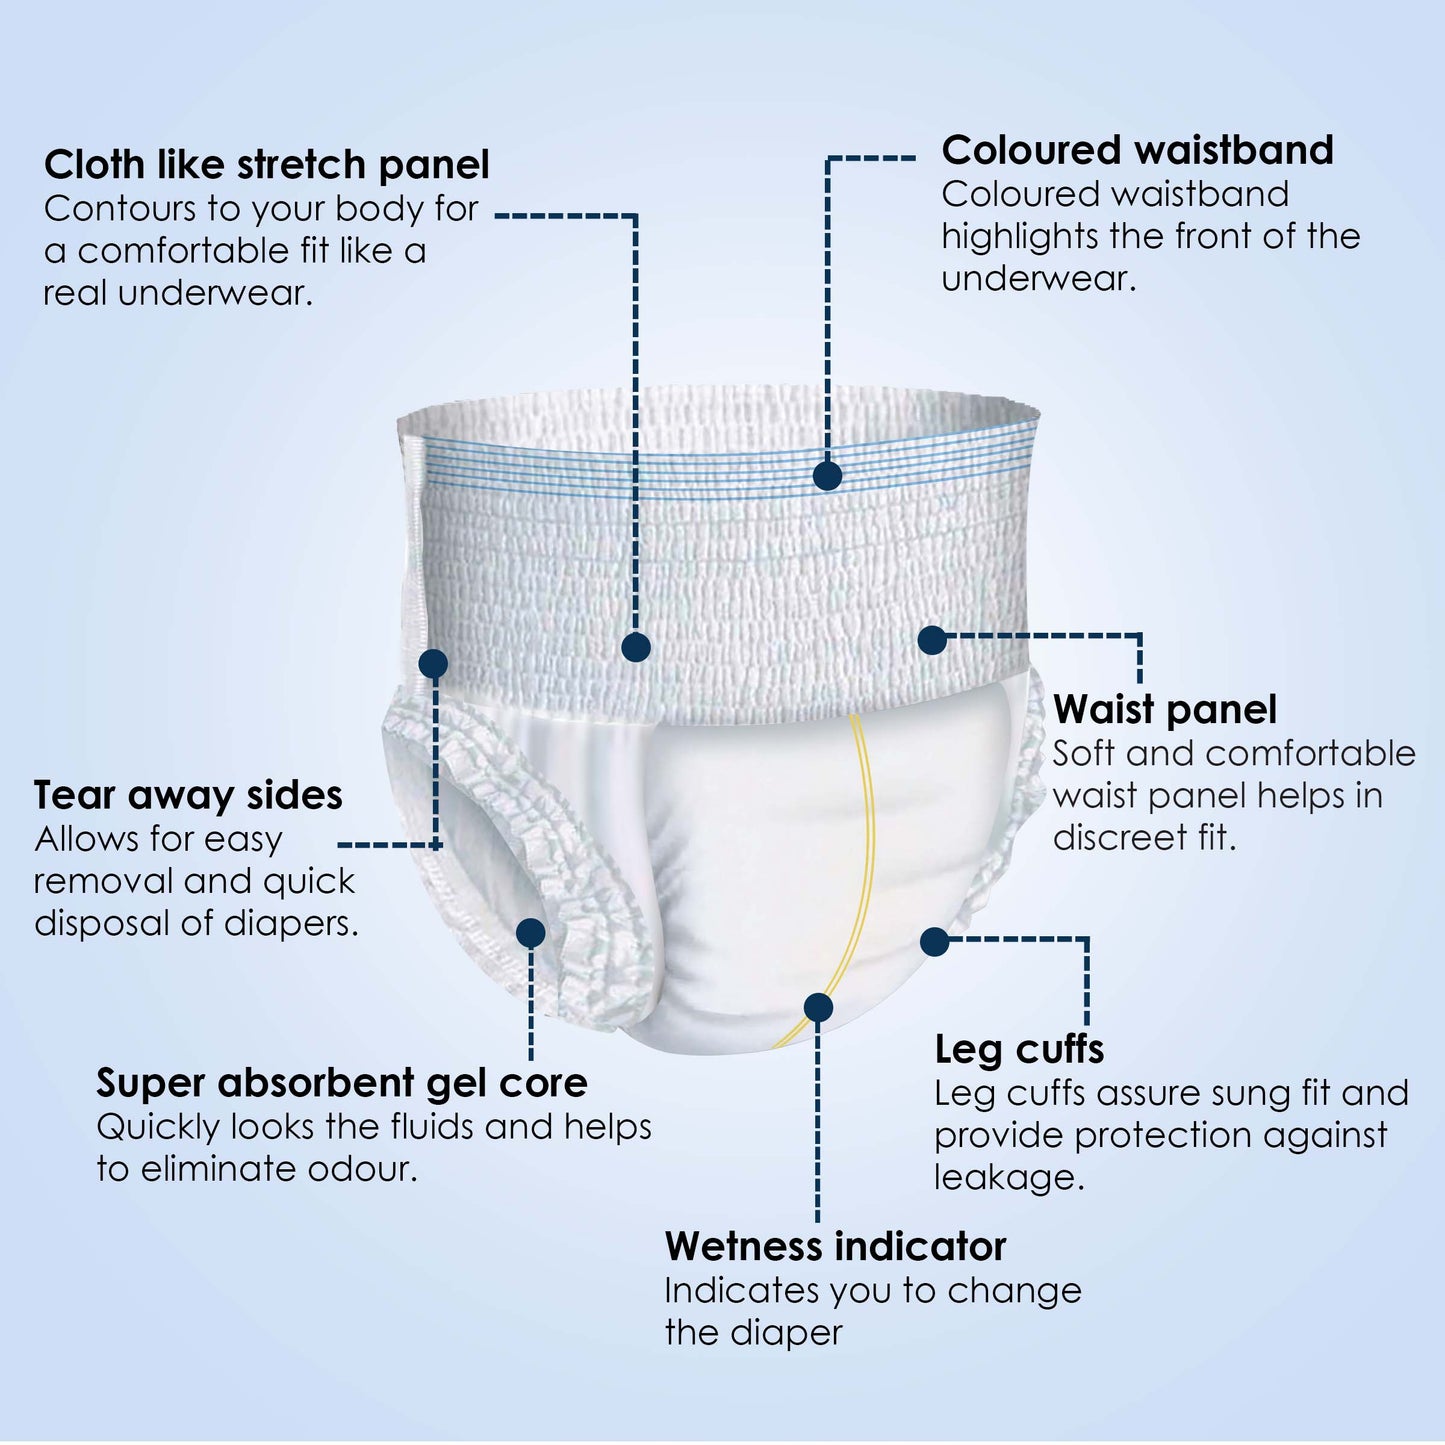 KareIn Classic Adult Diaper Pants, Medium 75 - 100 Cm (30"- 40"), Unisex, Leakproof, Elastic Waist, Wetness, Indicator, Pack of 6, 60 Count